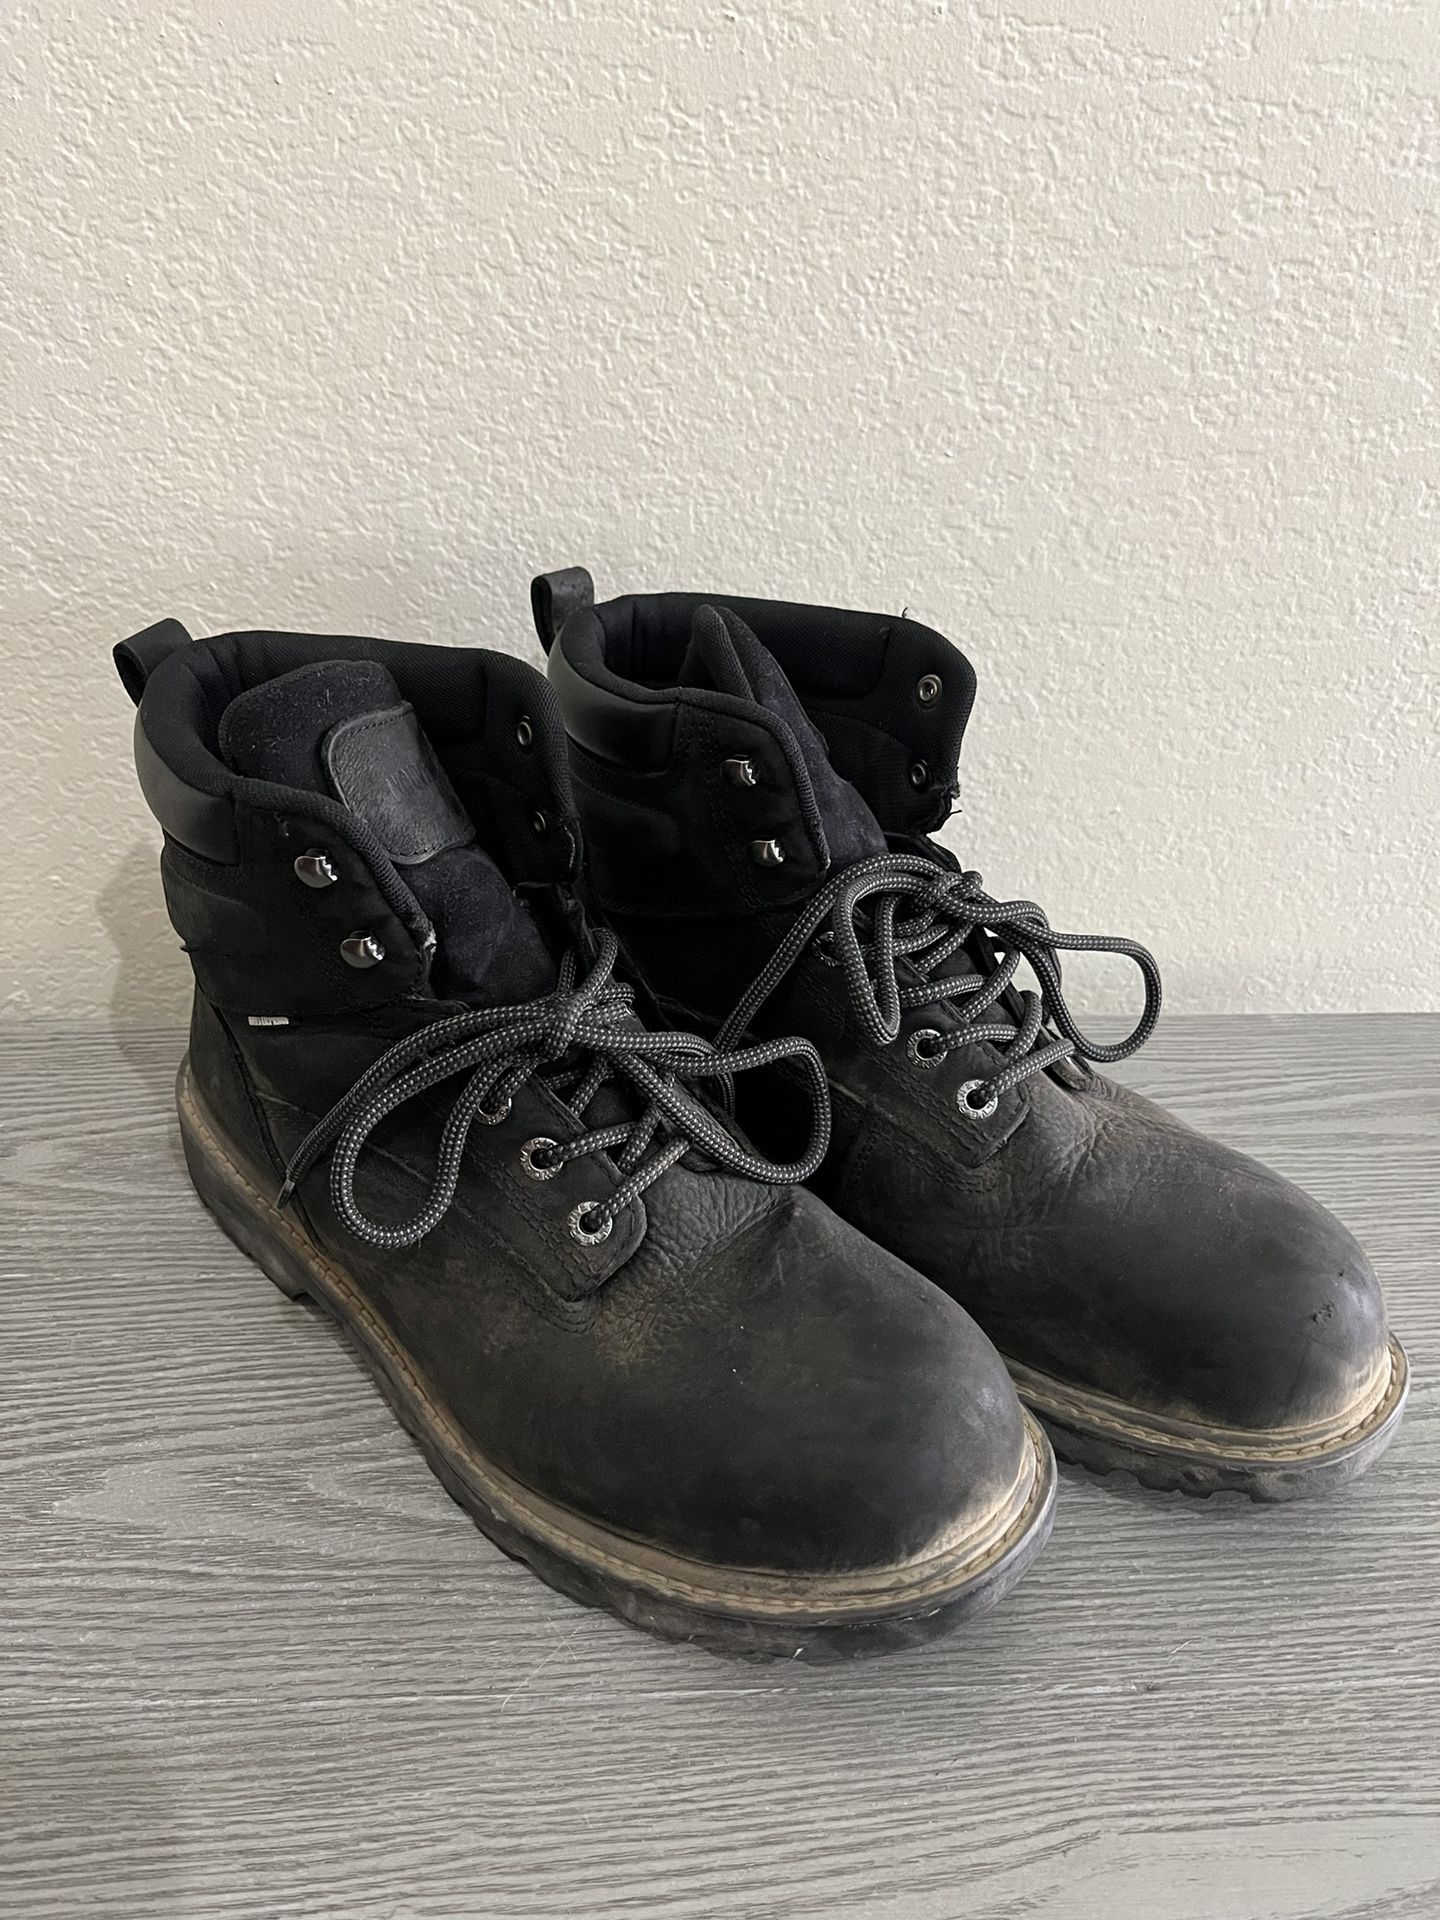 Wolverine Steel Toe Slip Resistant Black Work Boots Men’s Size 12